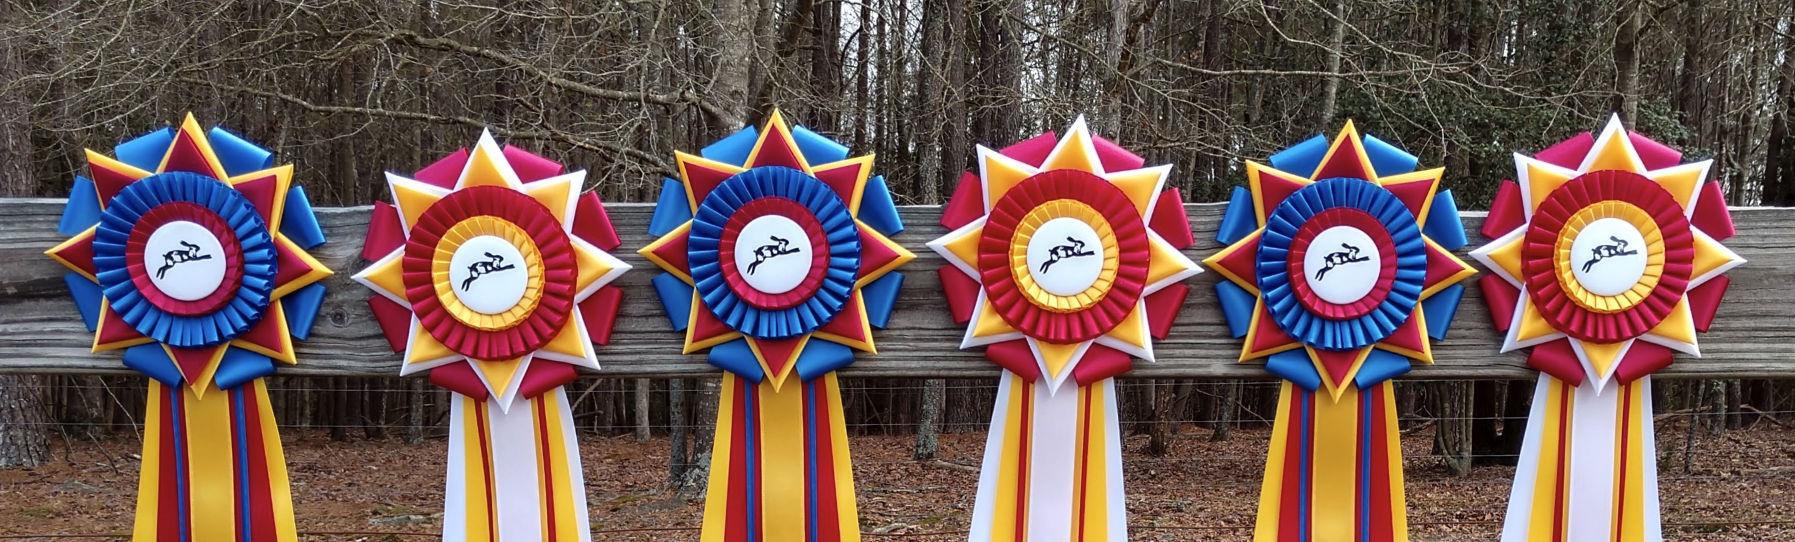 McLaughlin Ribbon Awards - Horse Show Ribbons and Custom Rosette Ribbons on Display